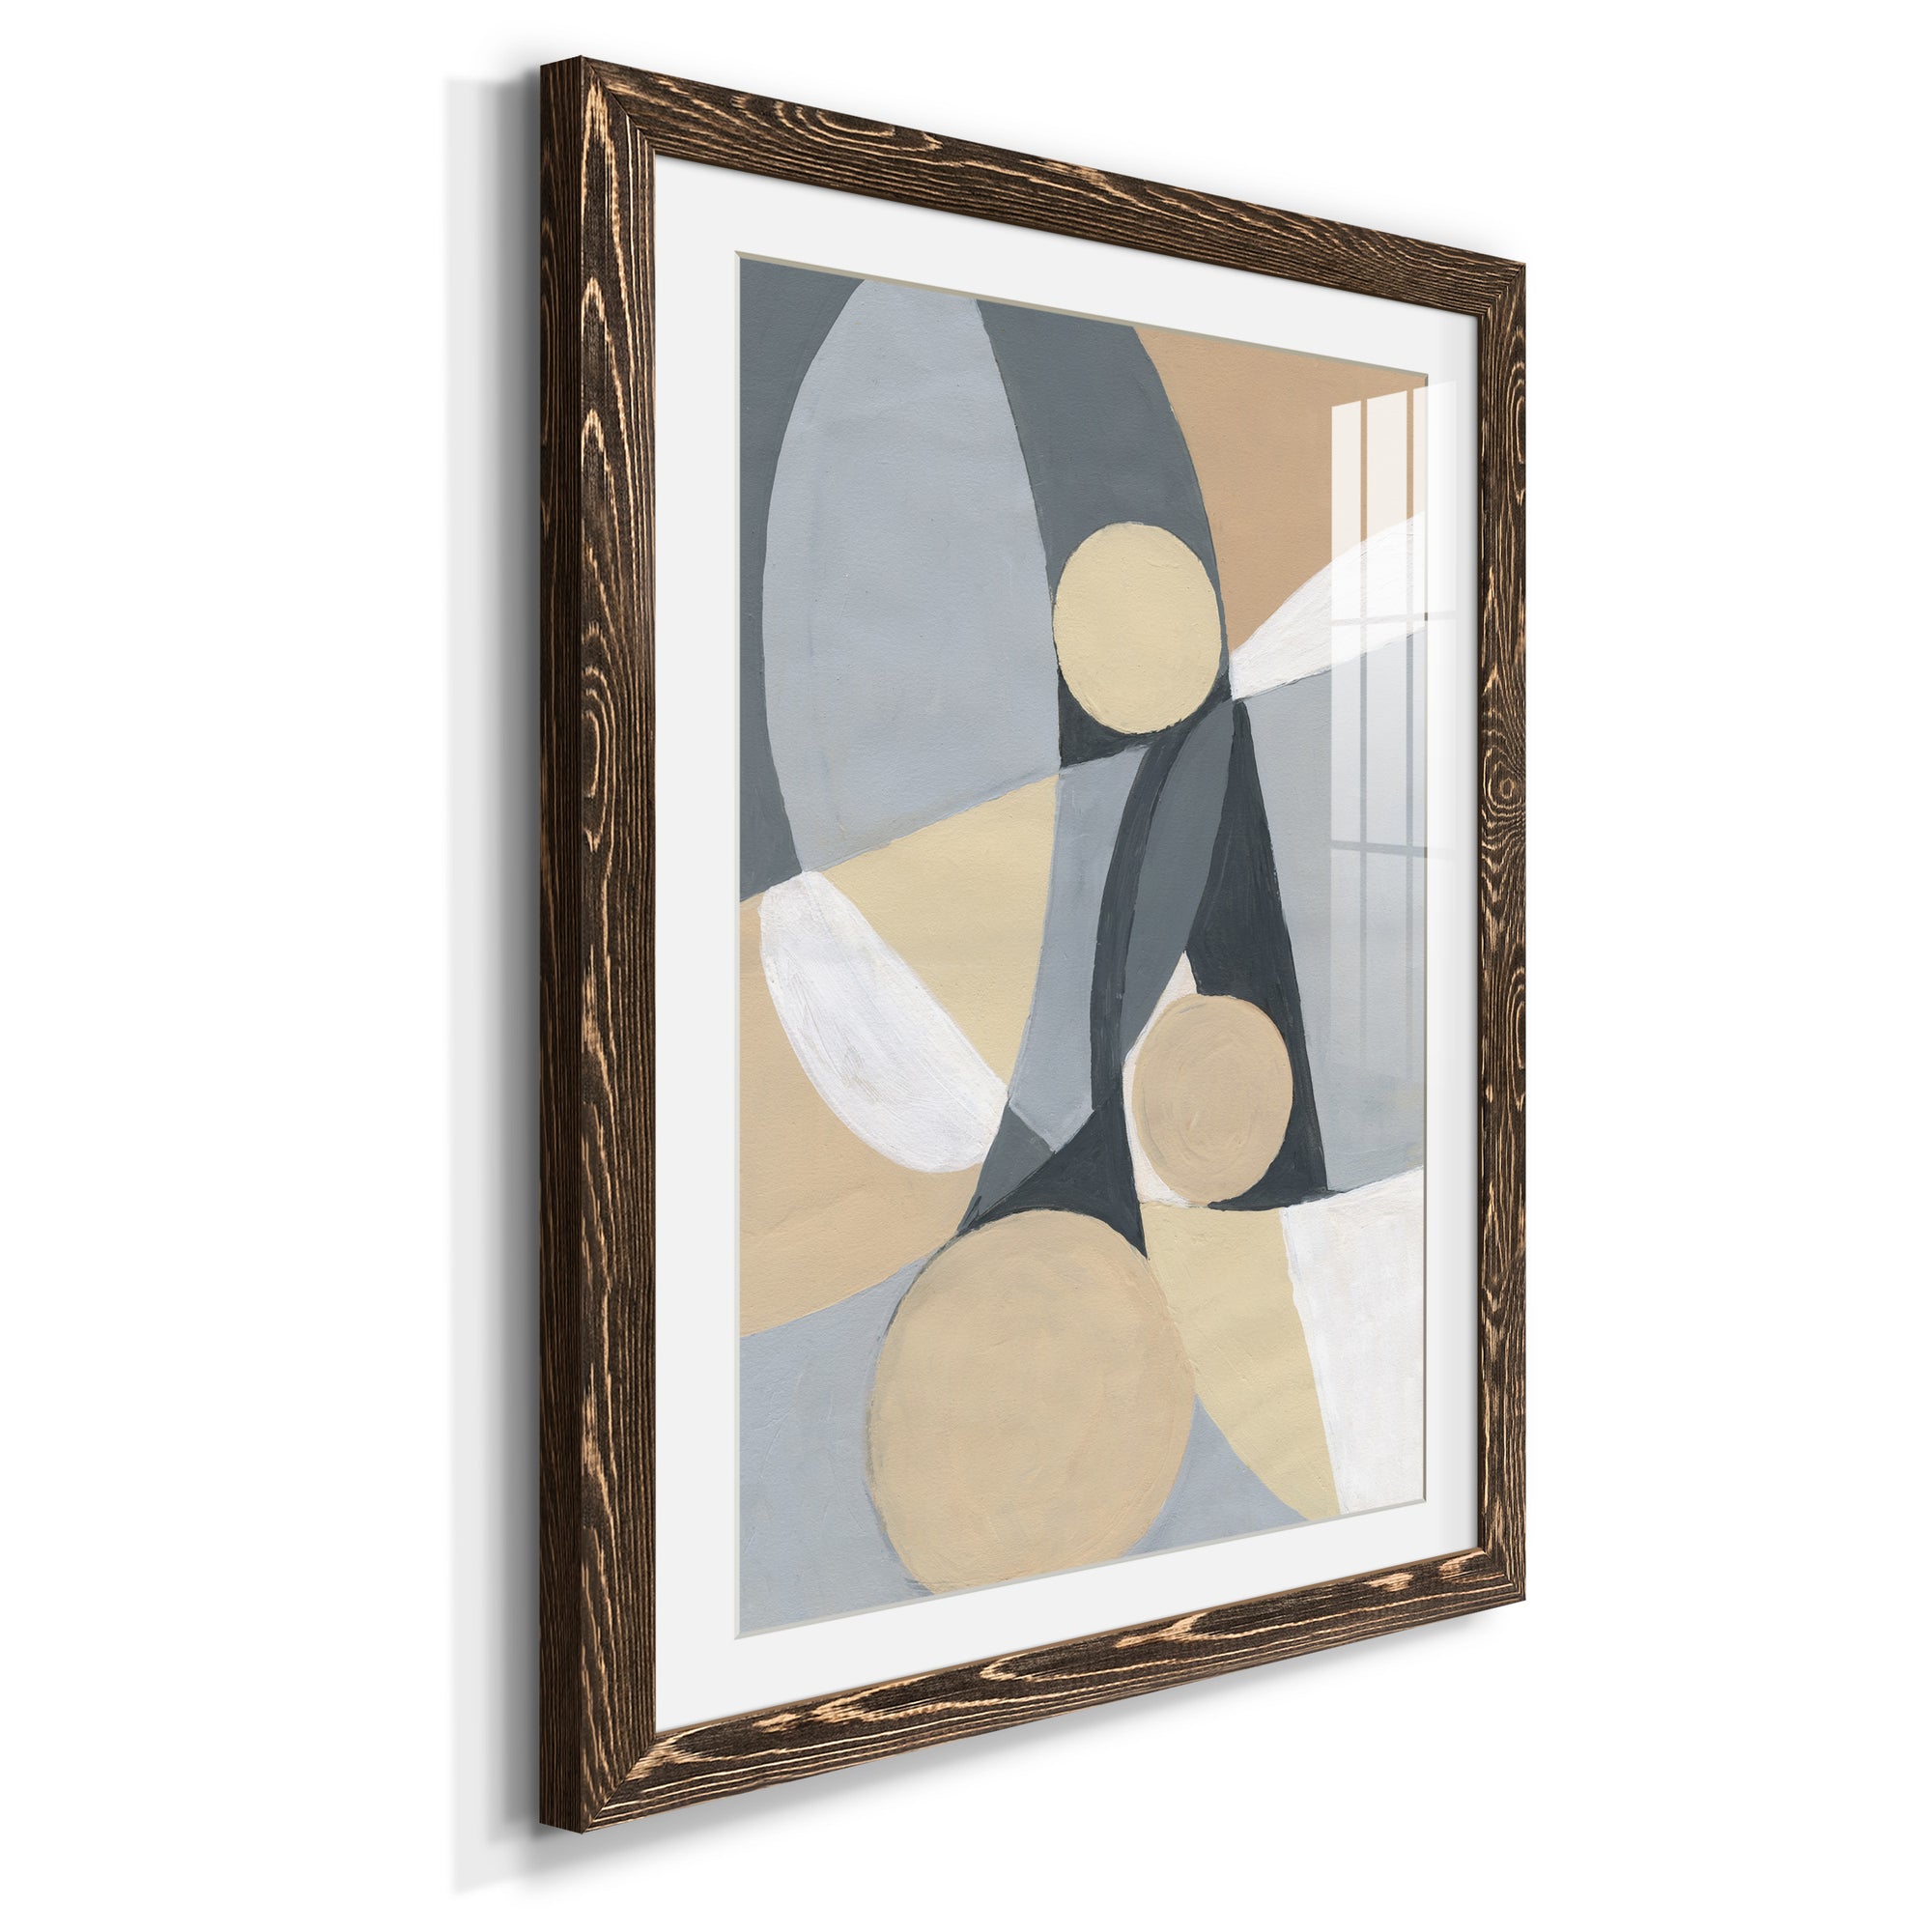 Millenium I - Premium Framed Print - Distressed Barnwood Frame - Ready to Hang